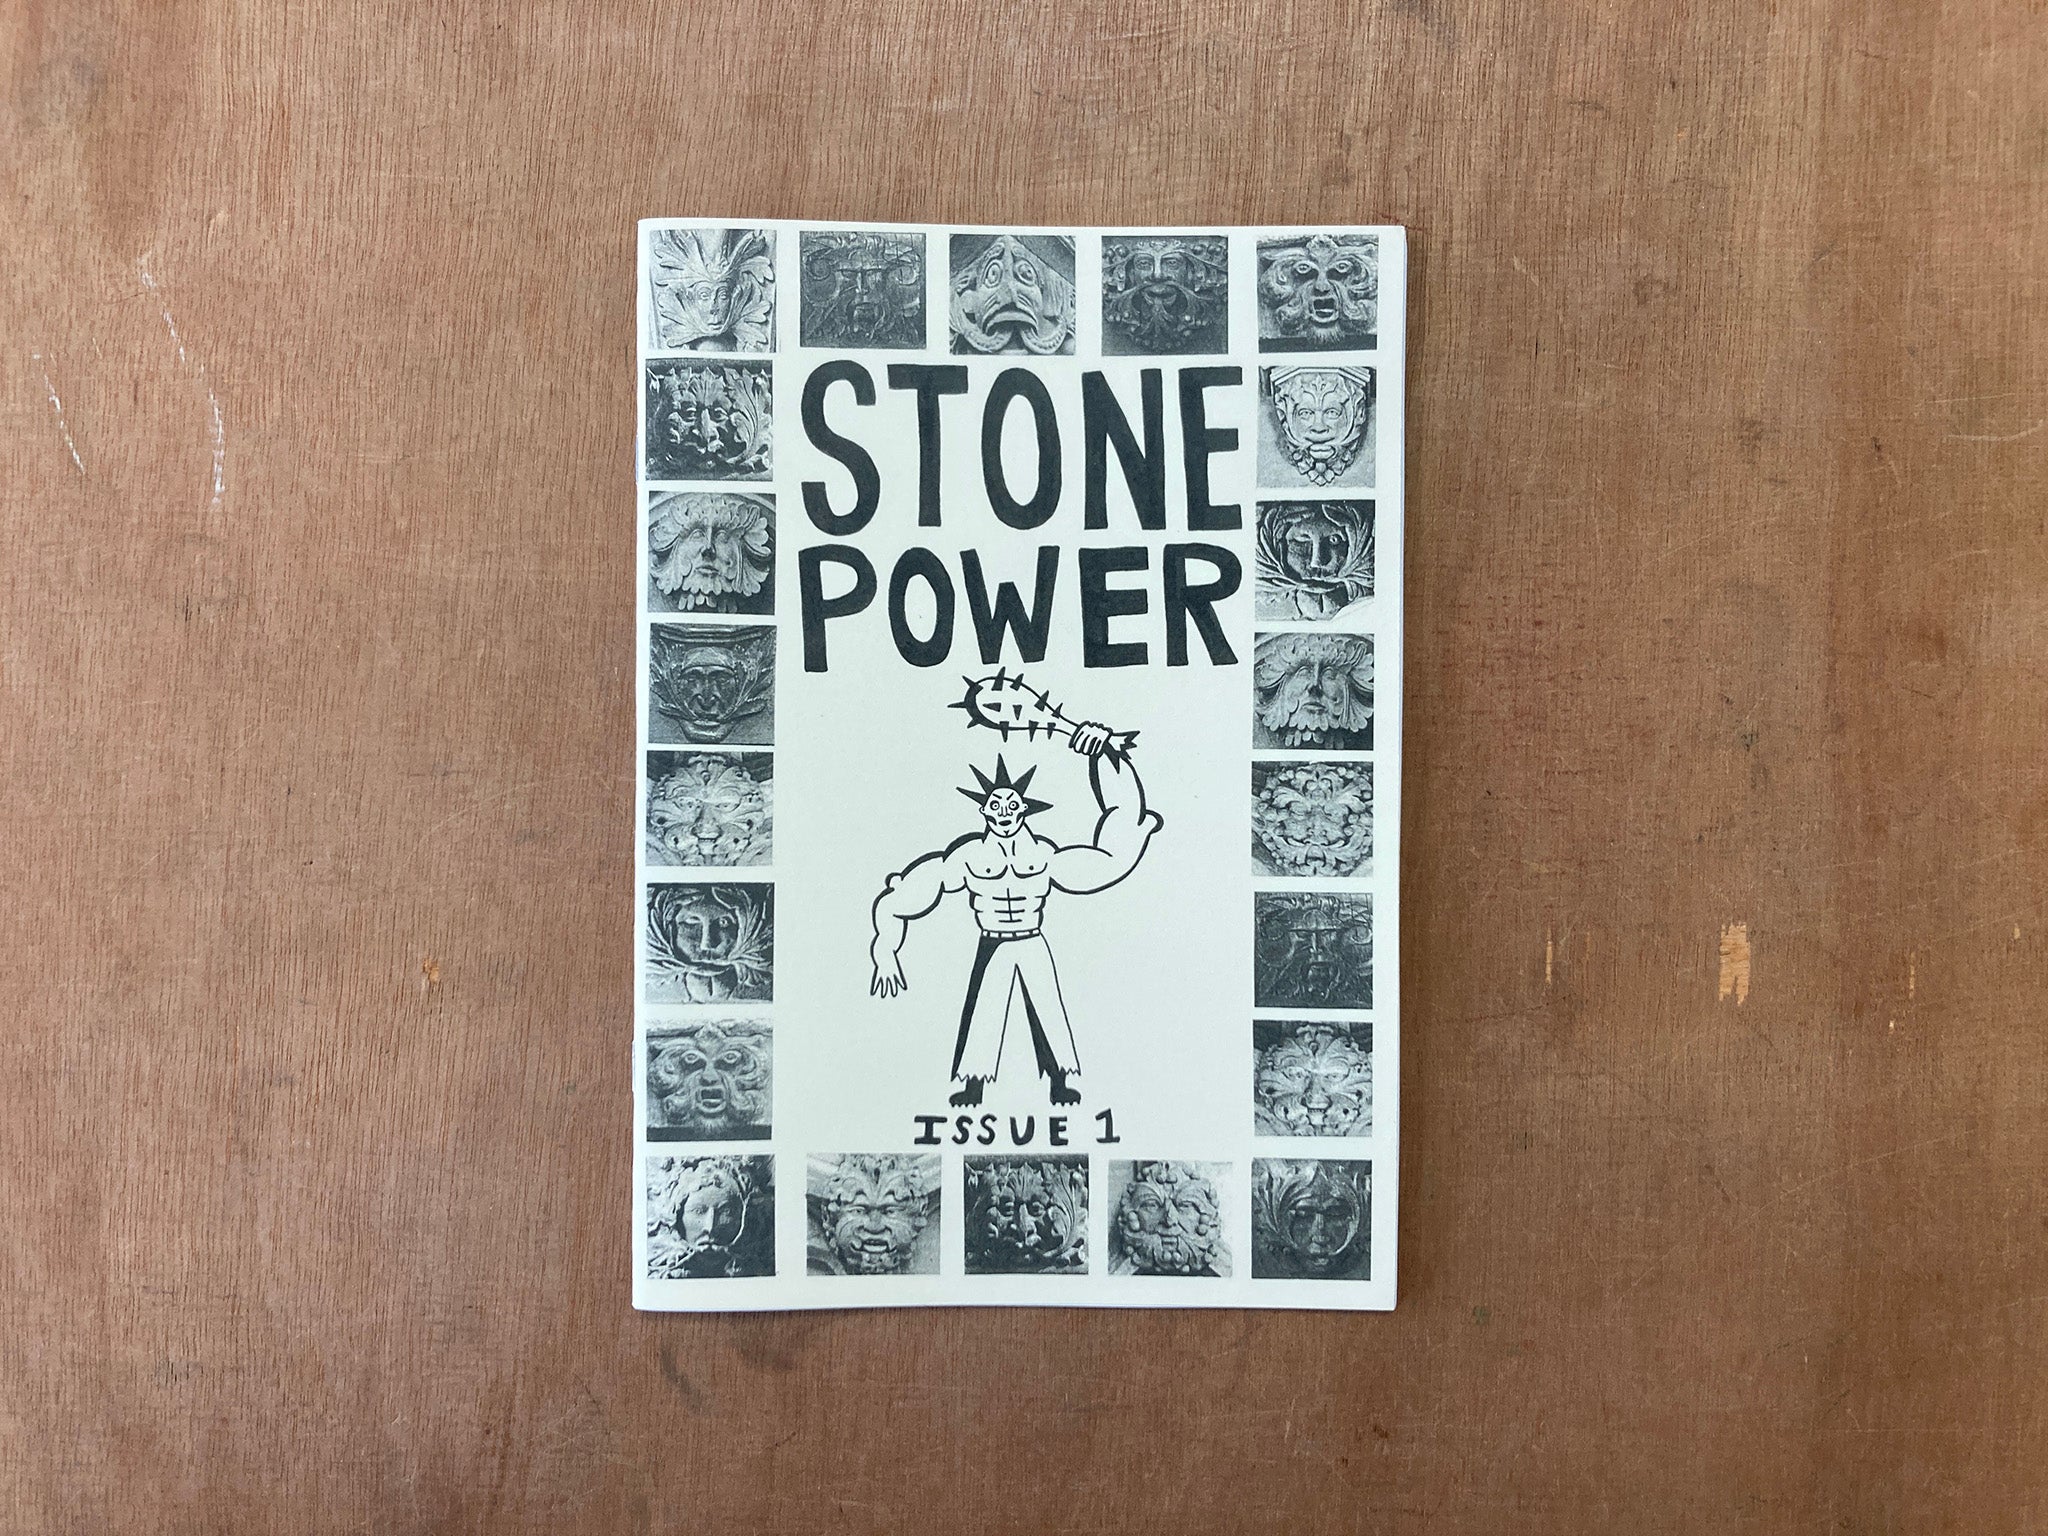 STONE POWER - ISSUE 1 by Jonny Brokenbrow